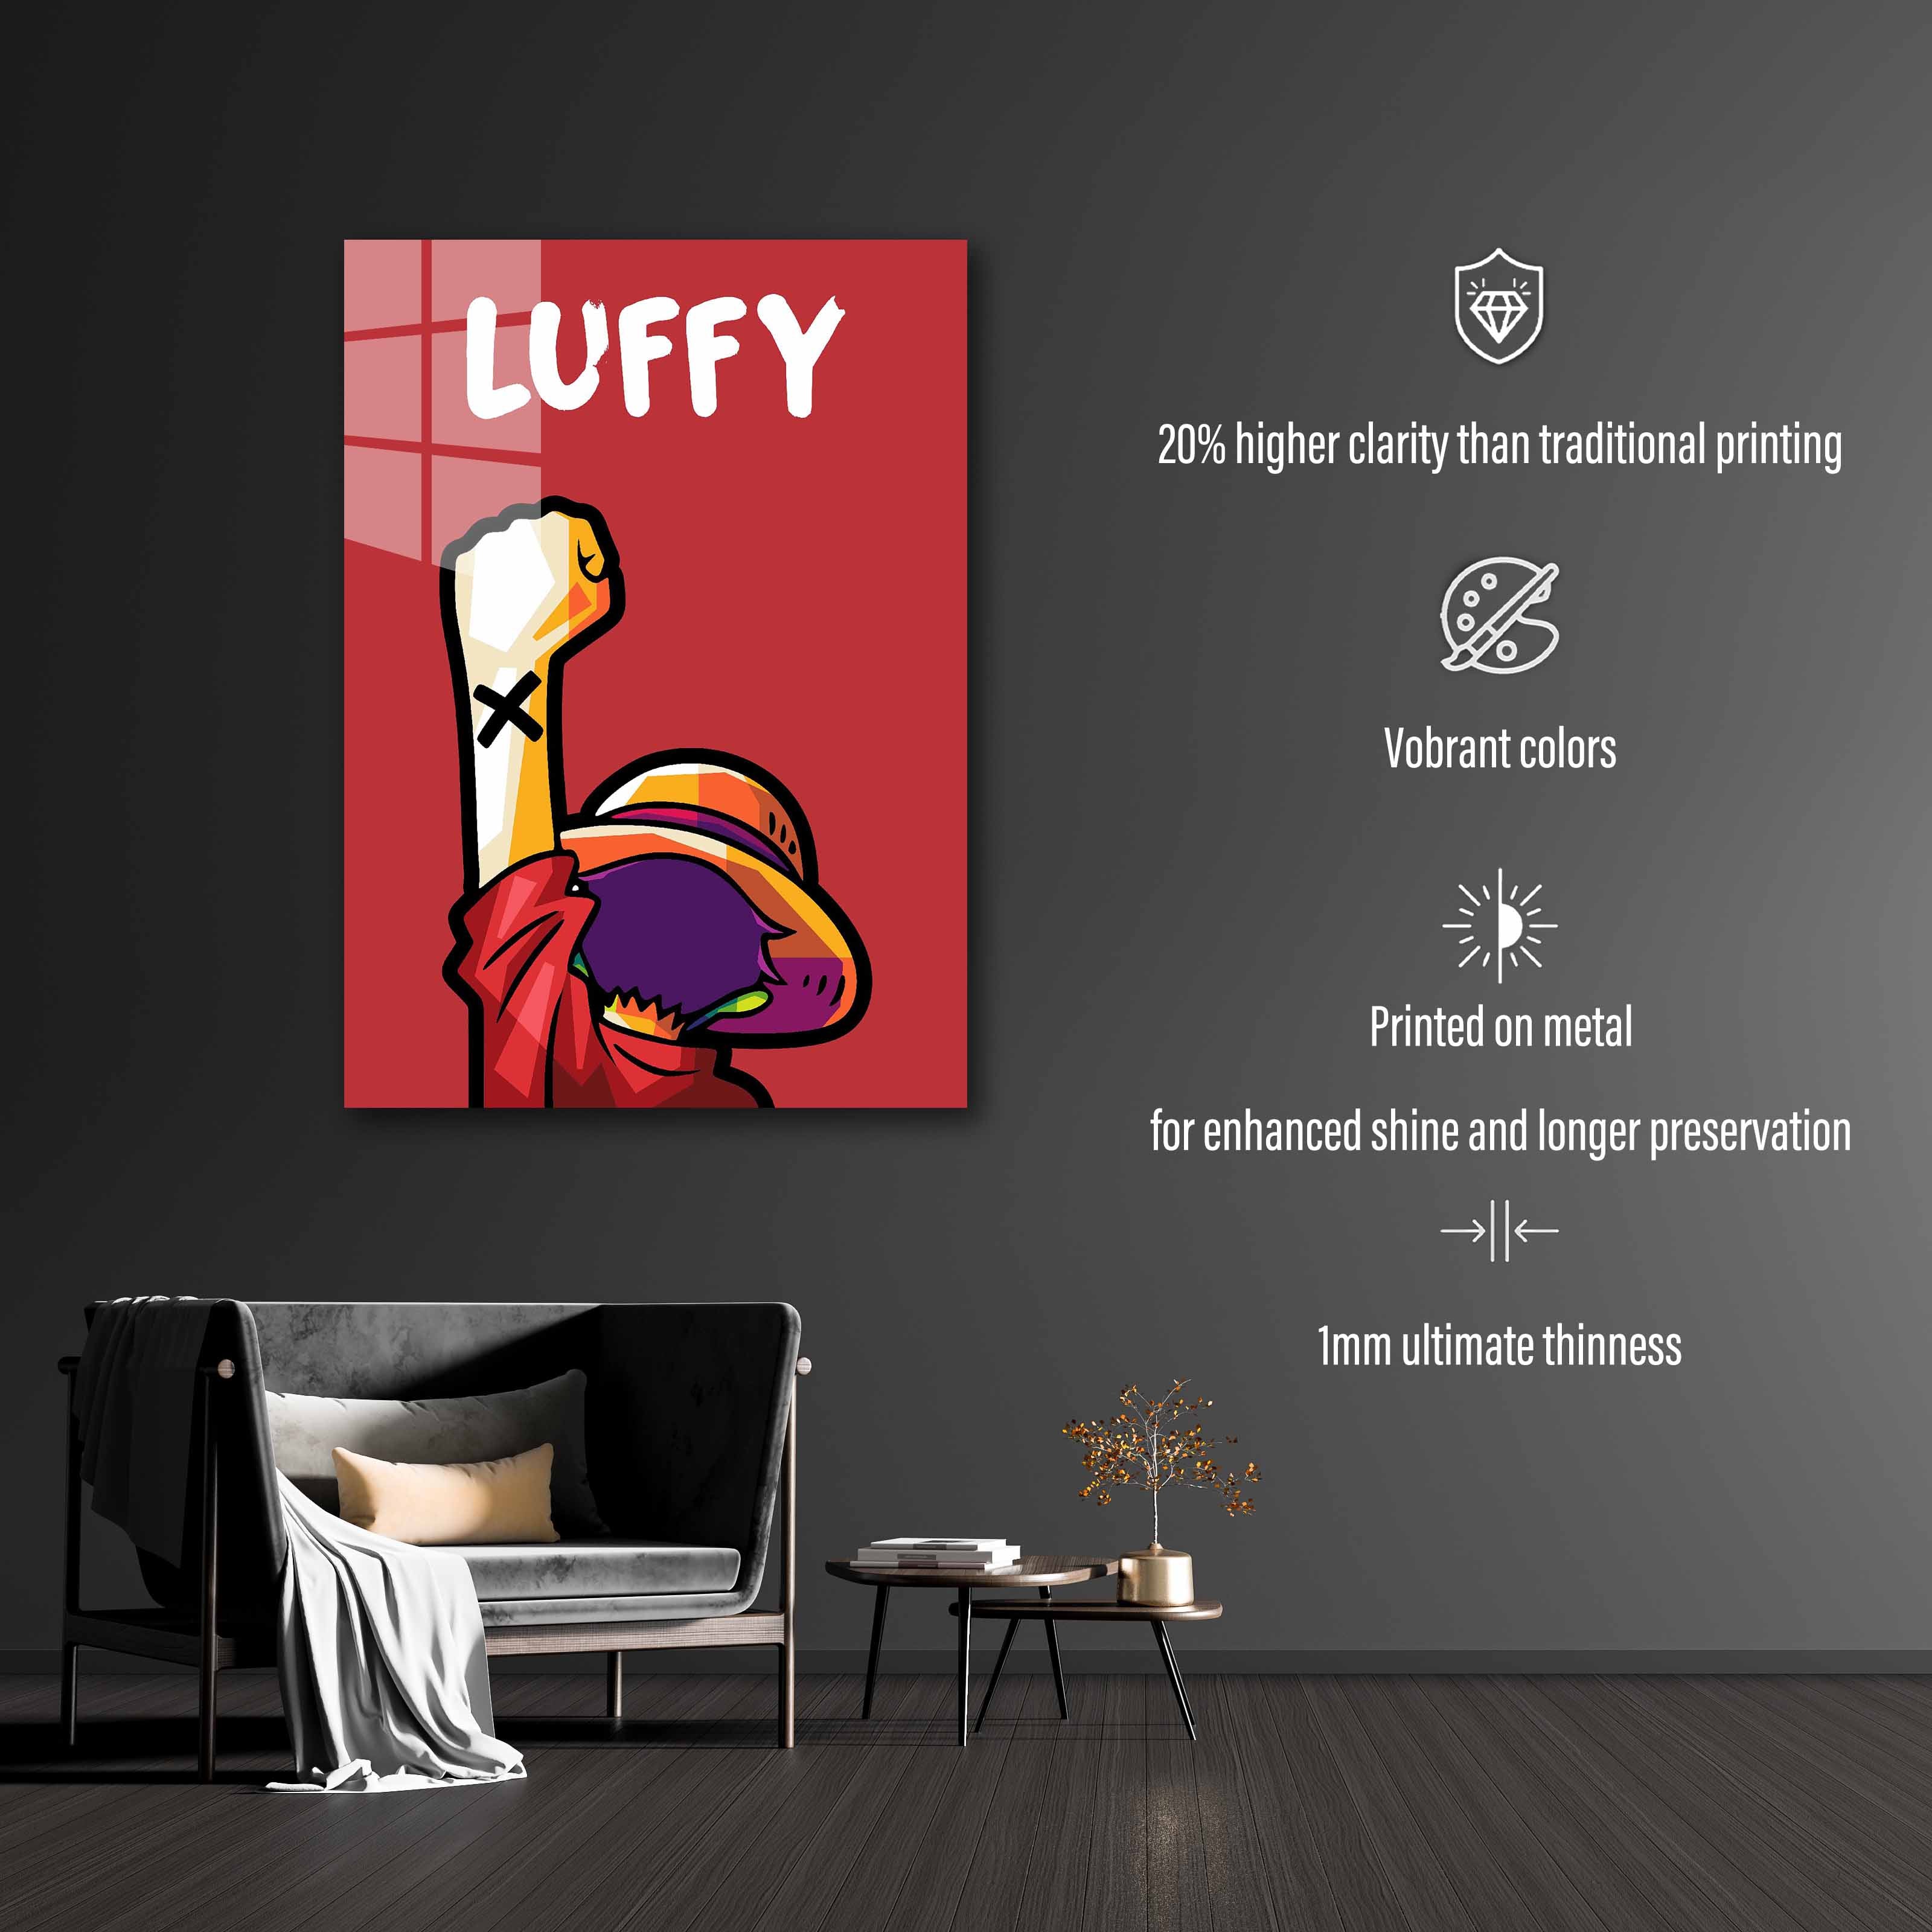 Luffy Child-designed by @Doublede Design